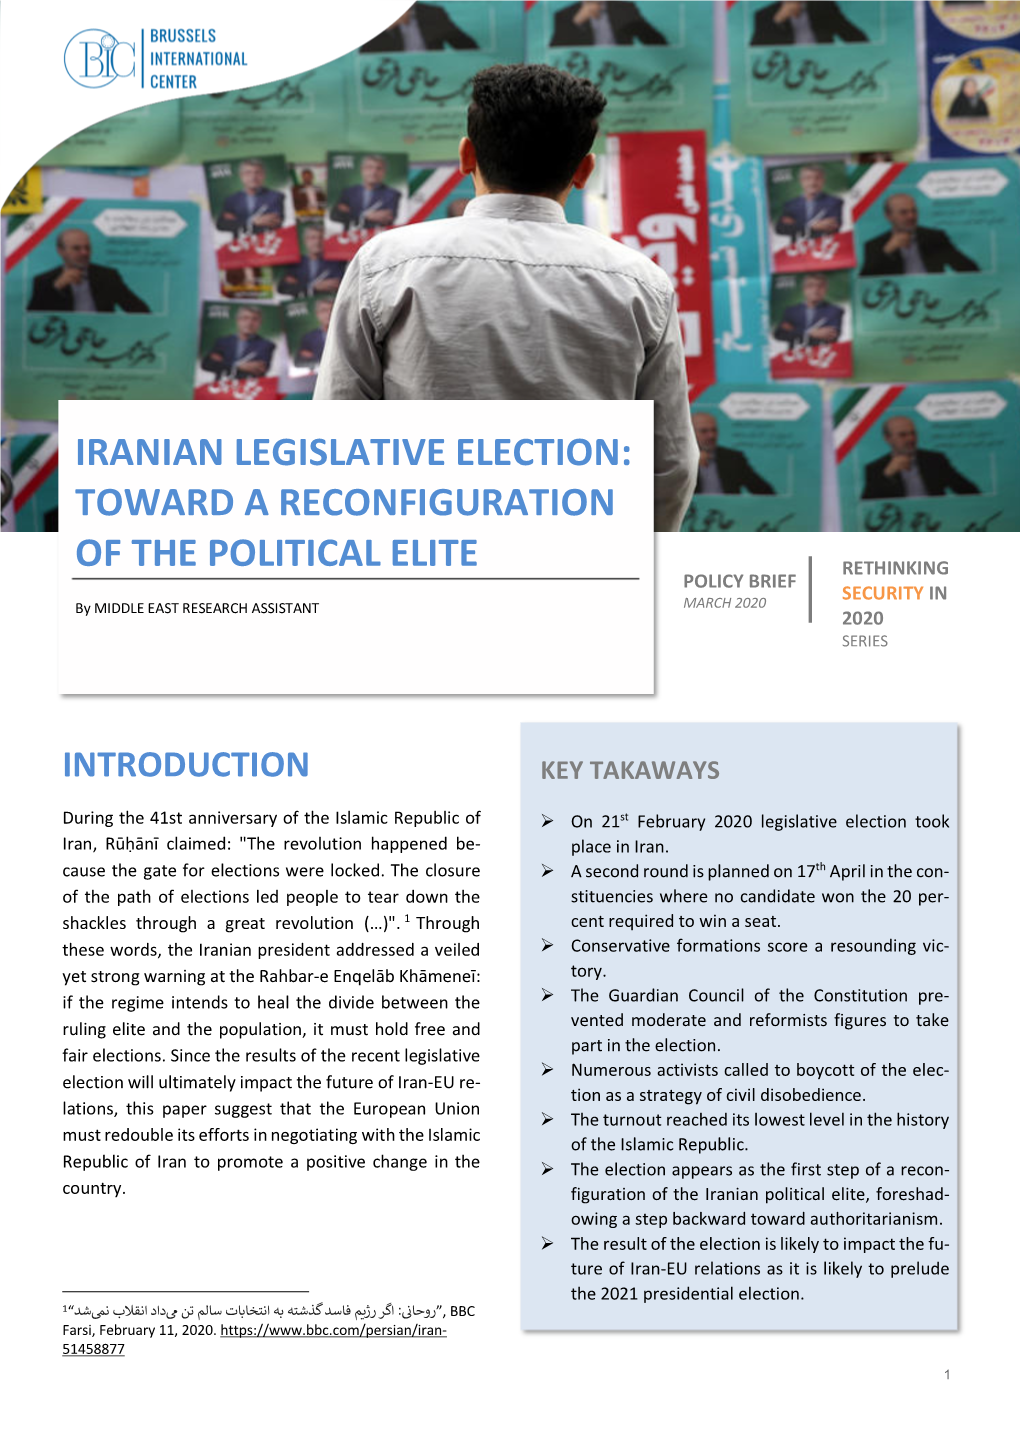 Iranian Legislative Election: Toward a Reconfiguration of the Political Elite